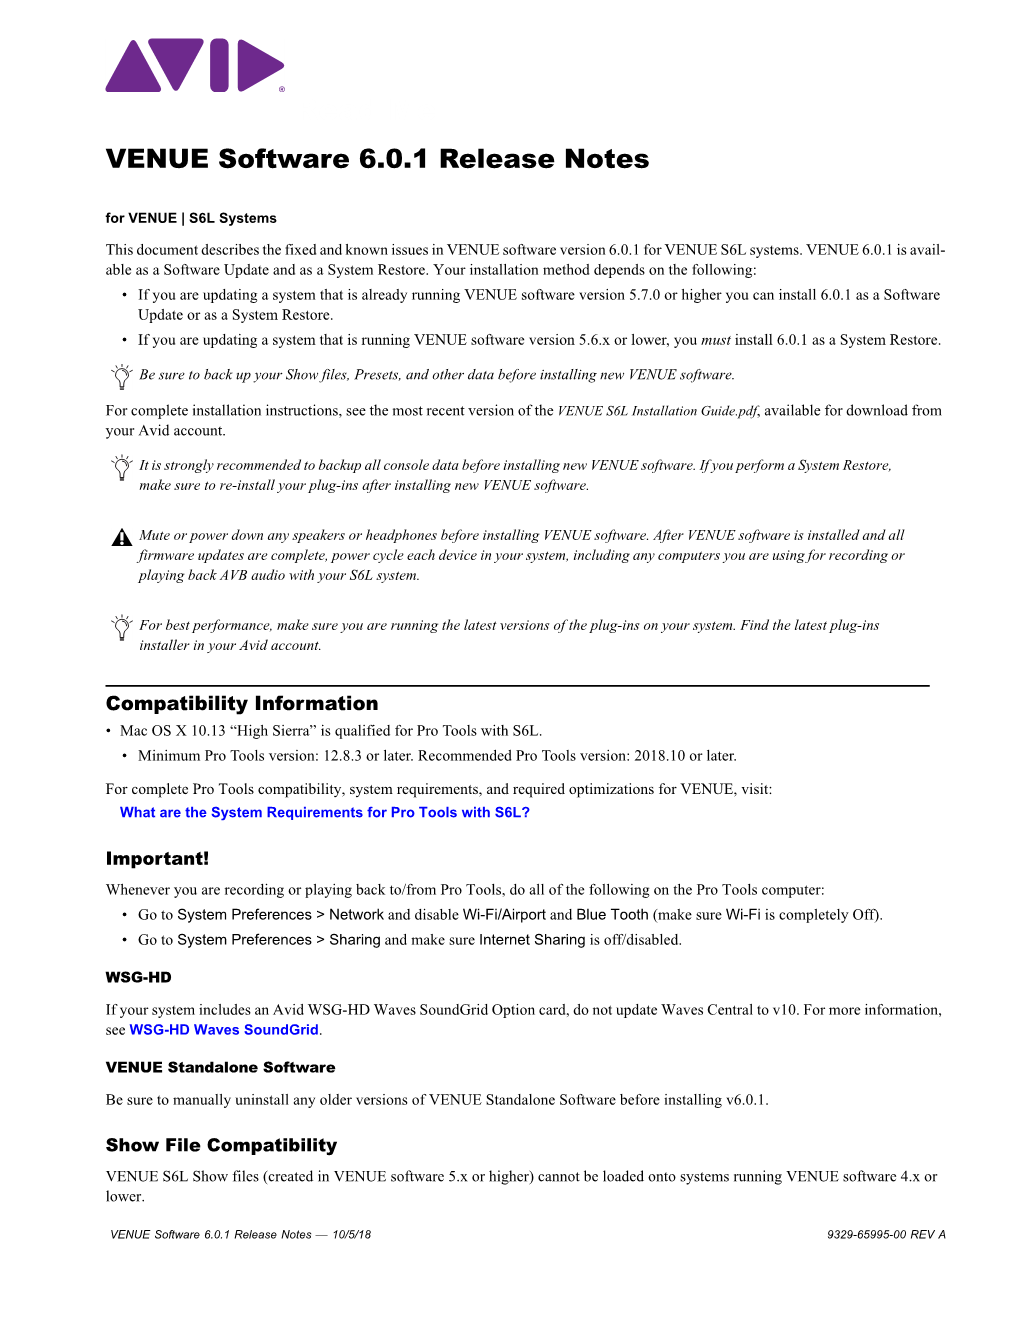 VENUE 6.0.1 Release Notes